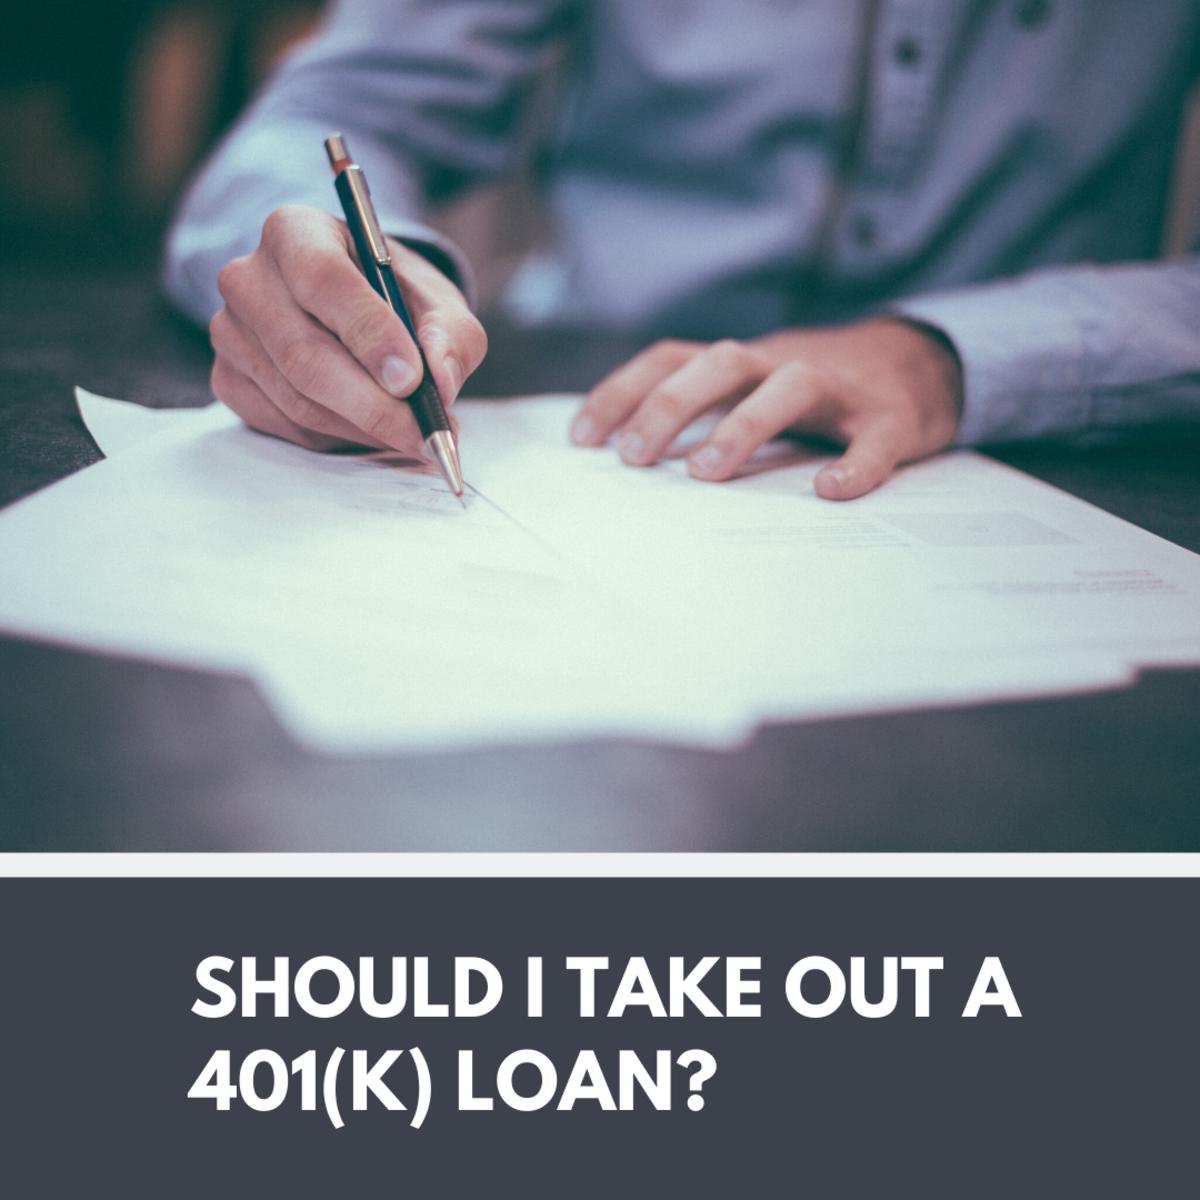 Should I Take out a 401(k) Loan?